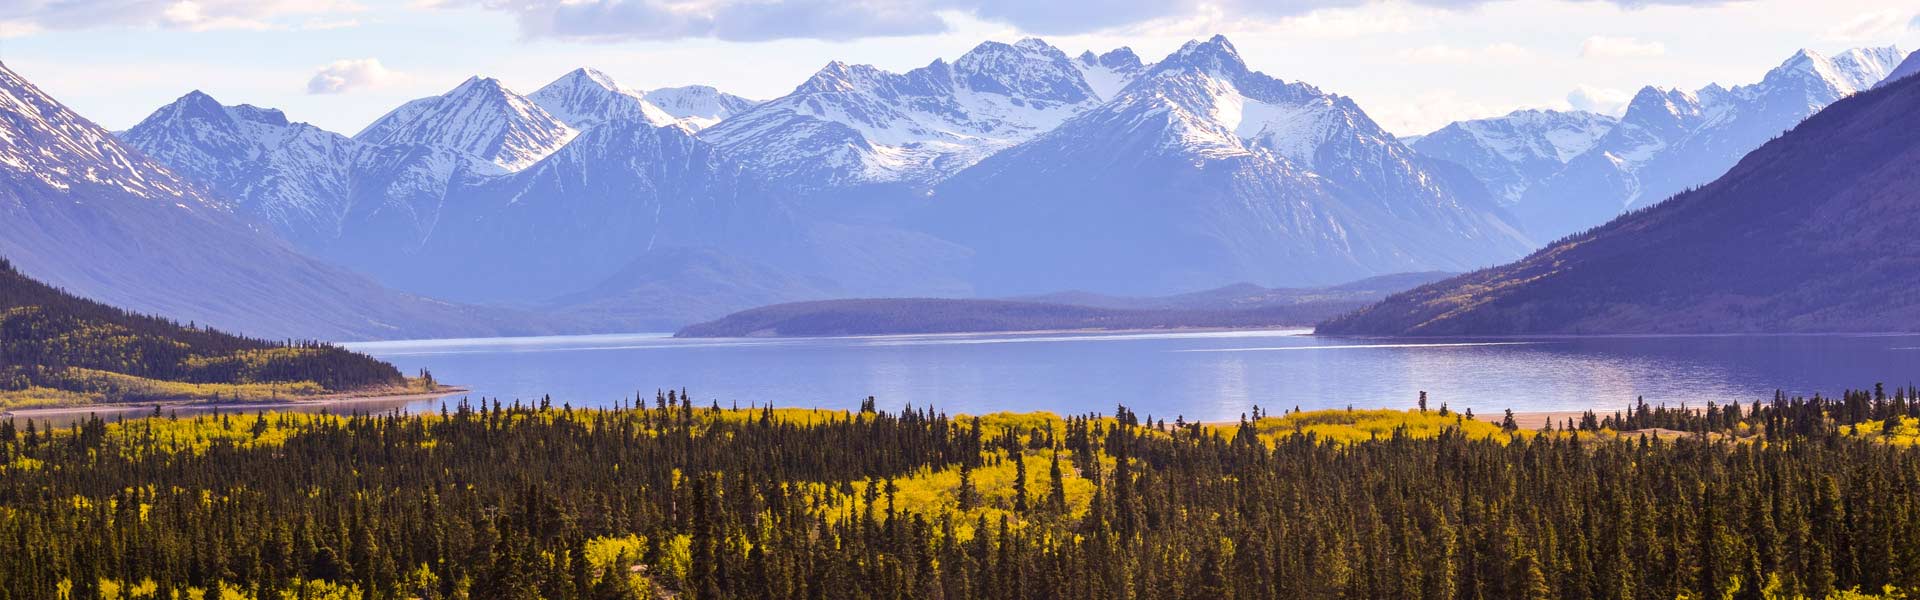 Nature Tours of Yukon